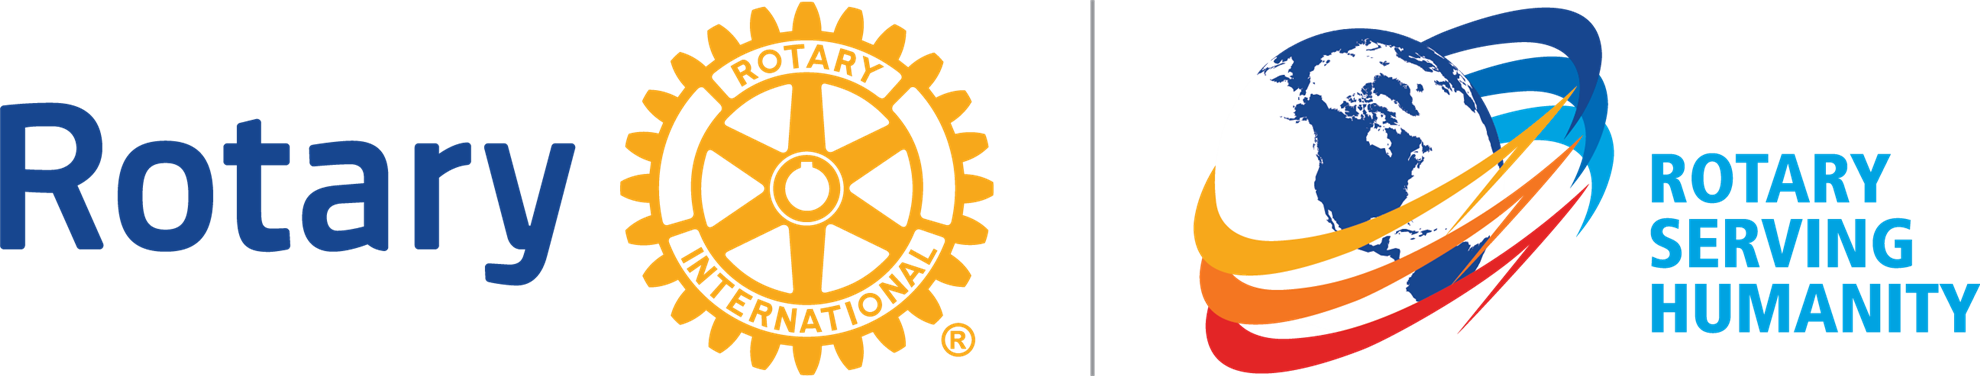 Rotary International Clipart 2 